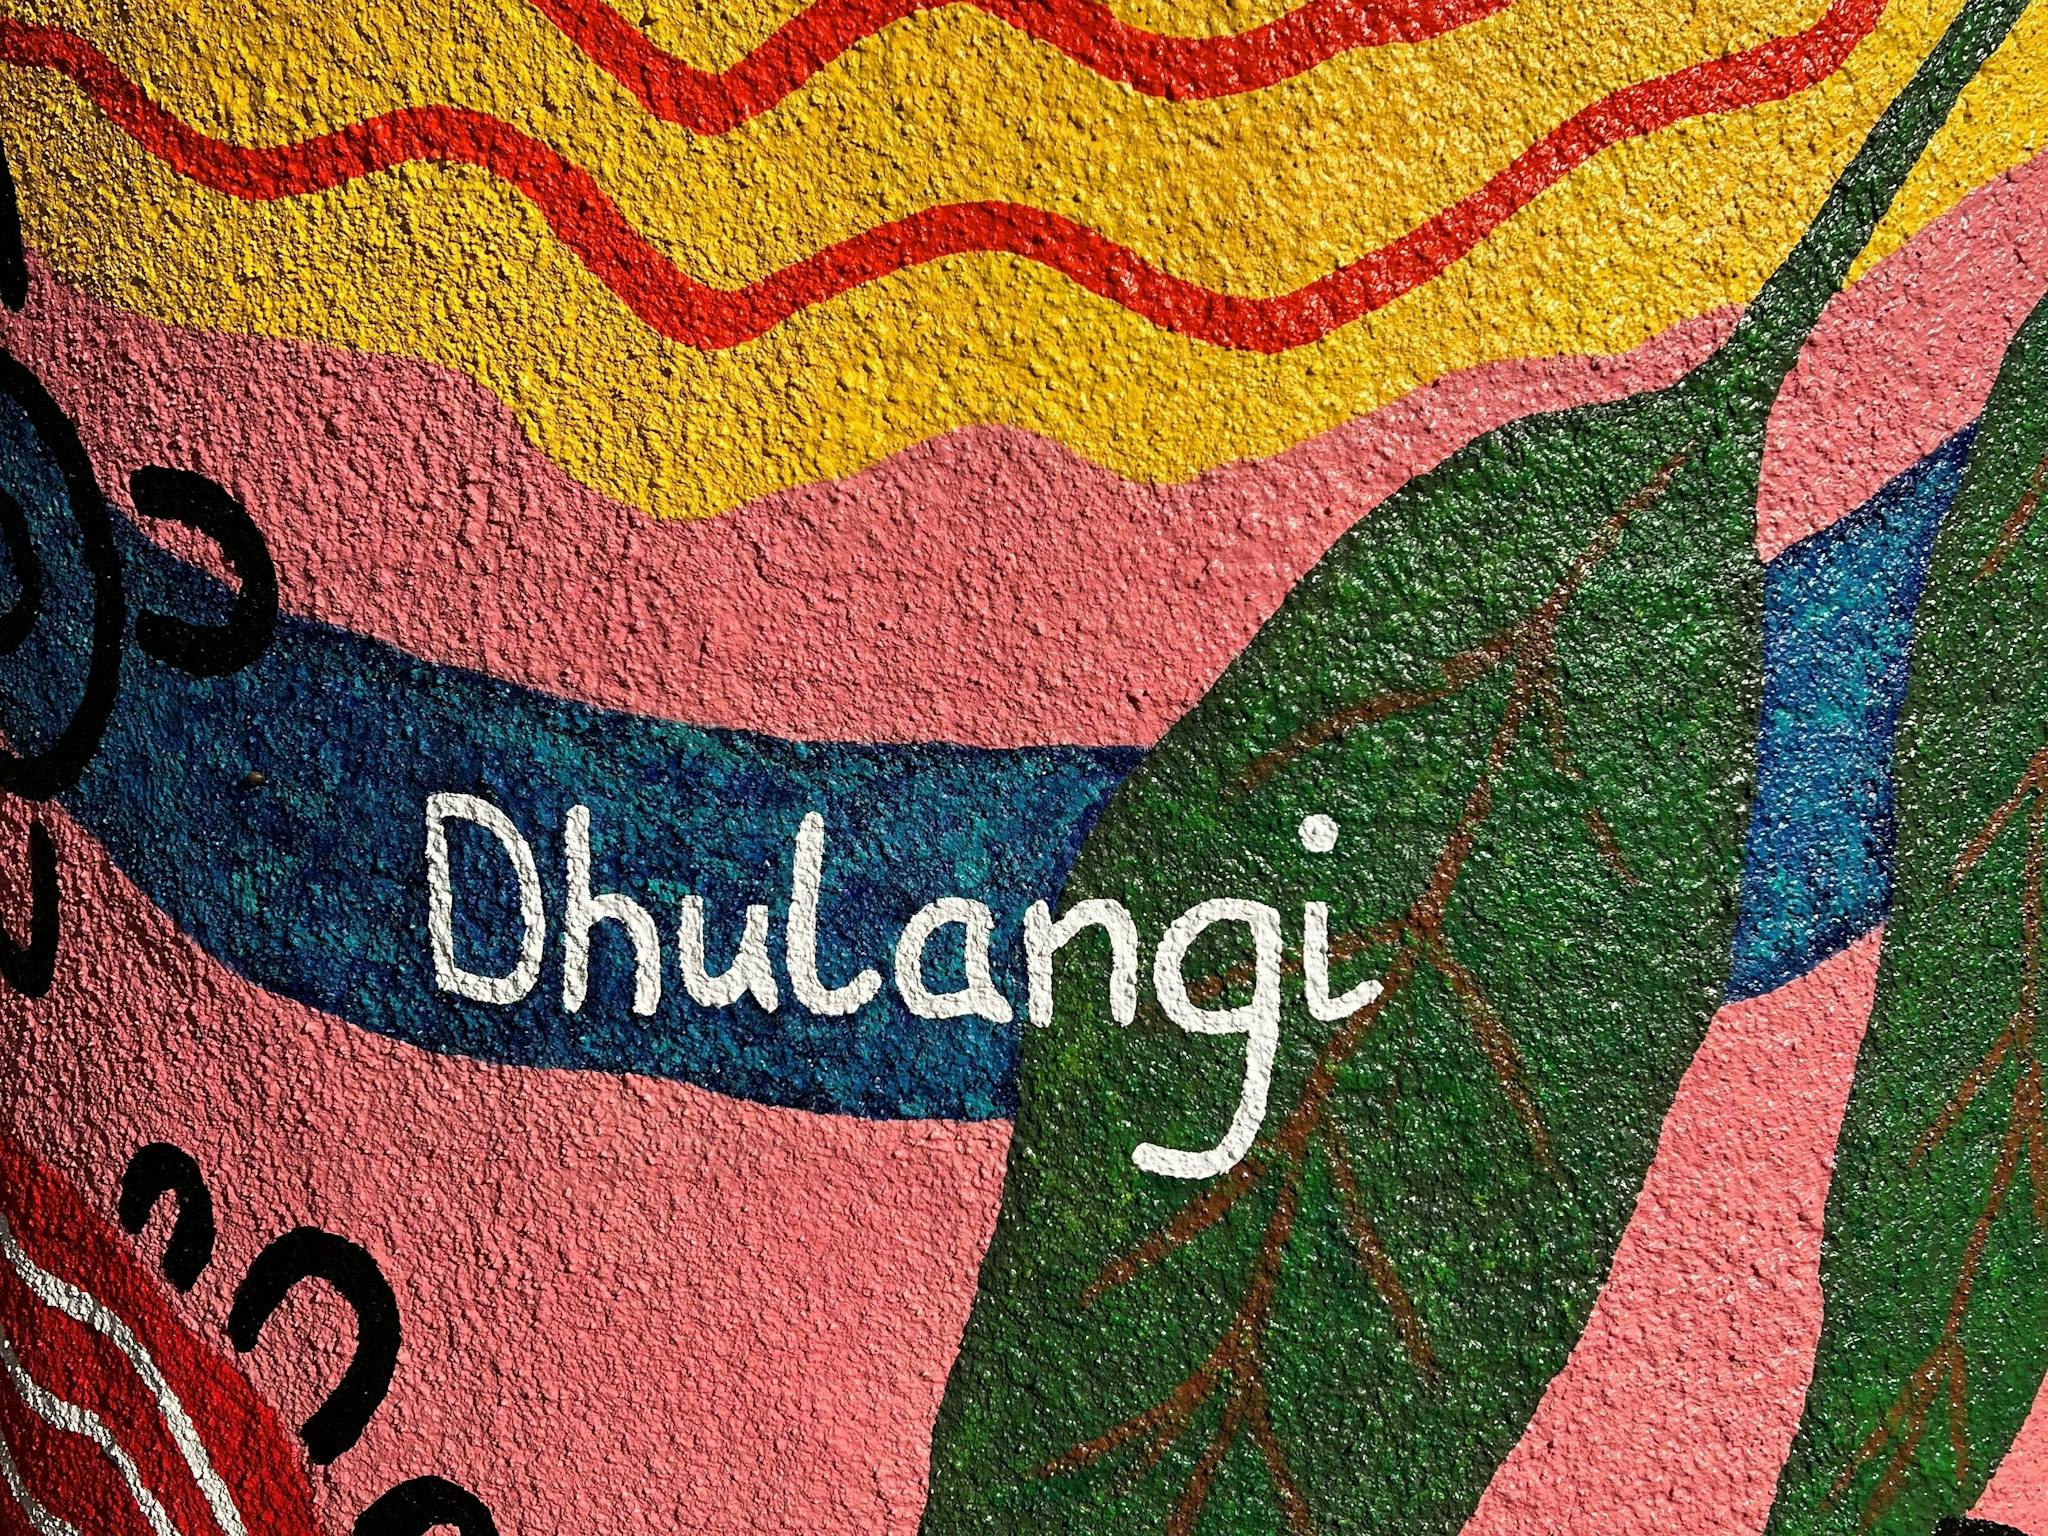 Dhulangi mural, Toolangi